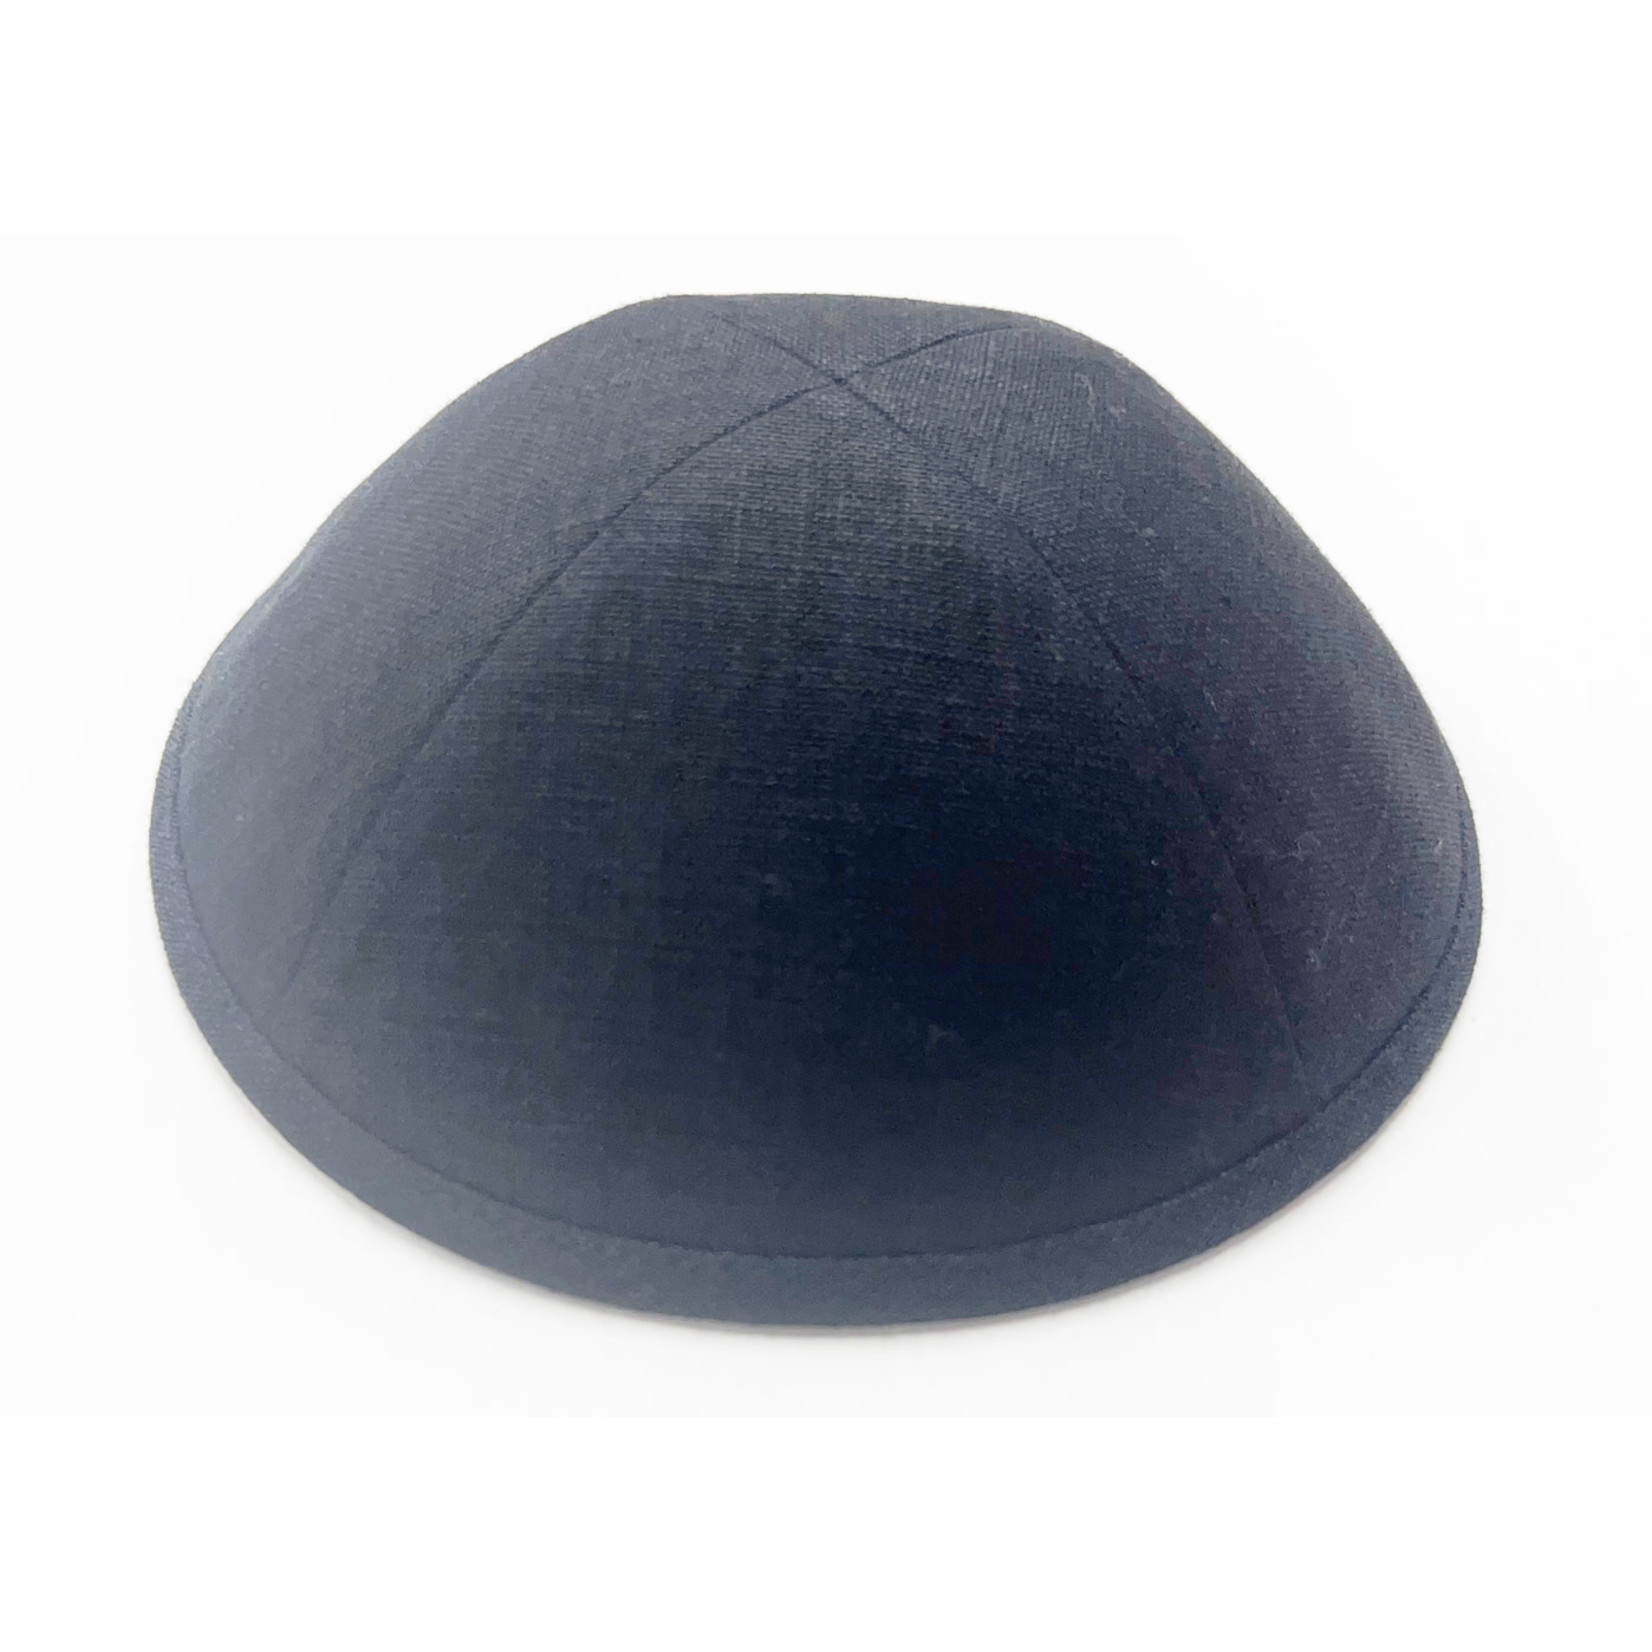 Black Linen Kippah, Size 2 - 18cm